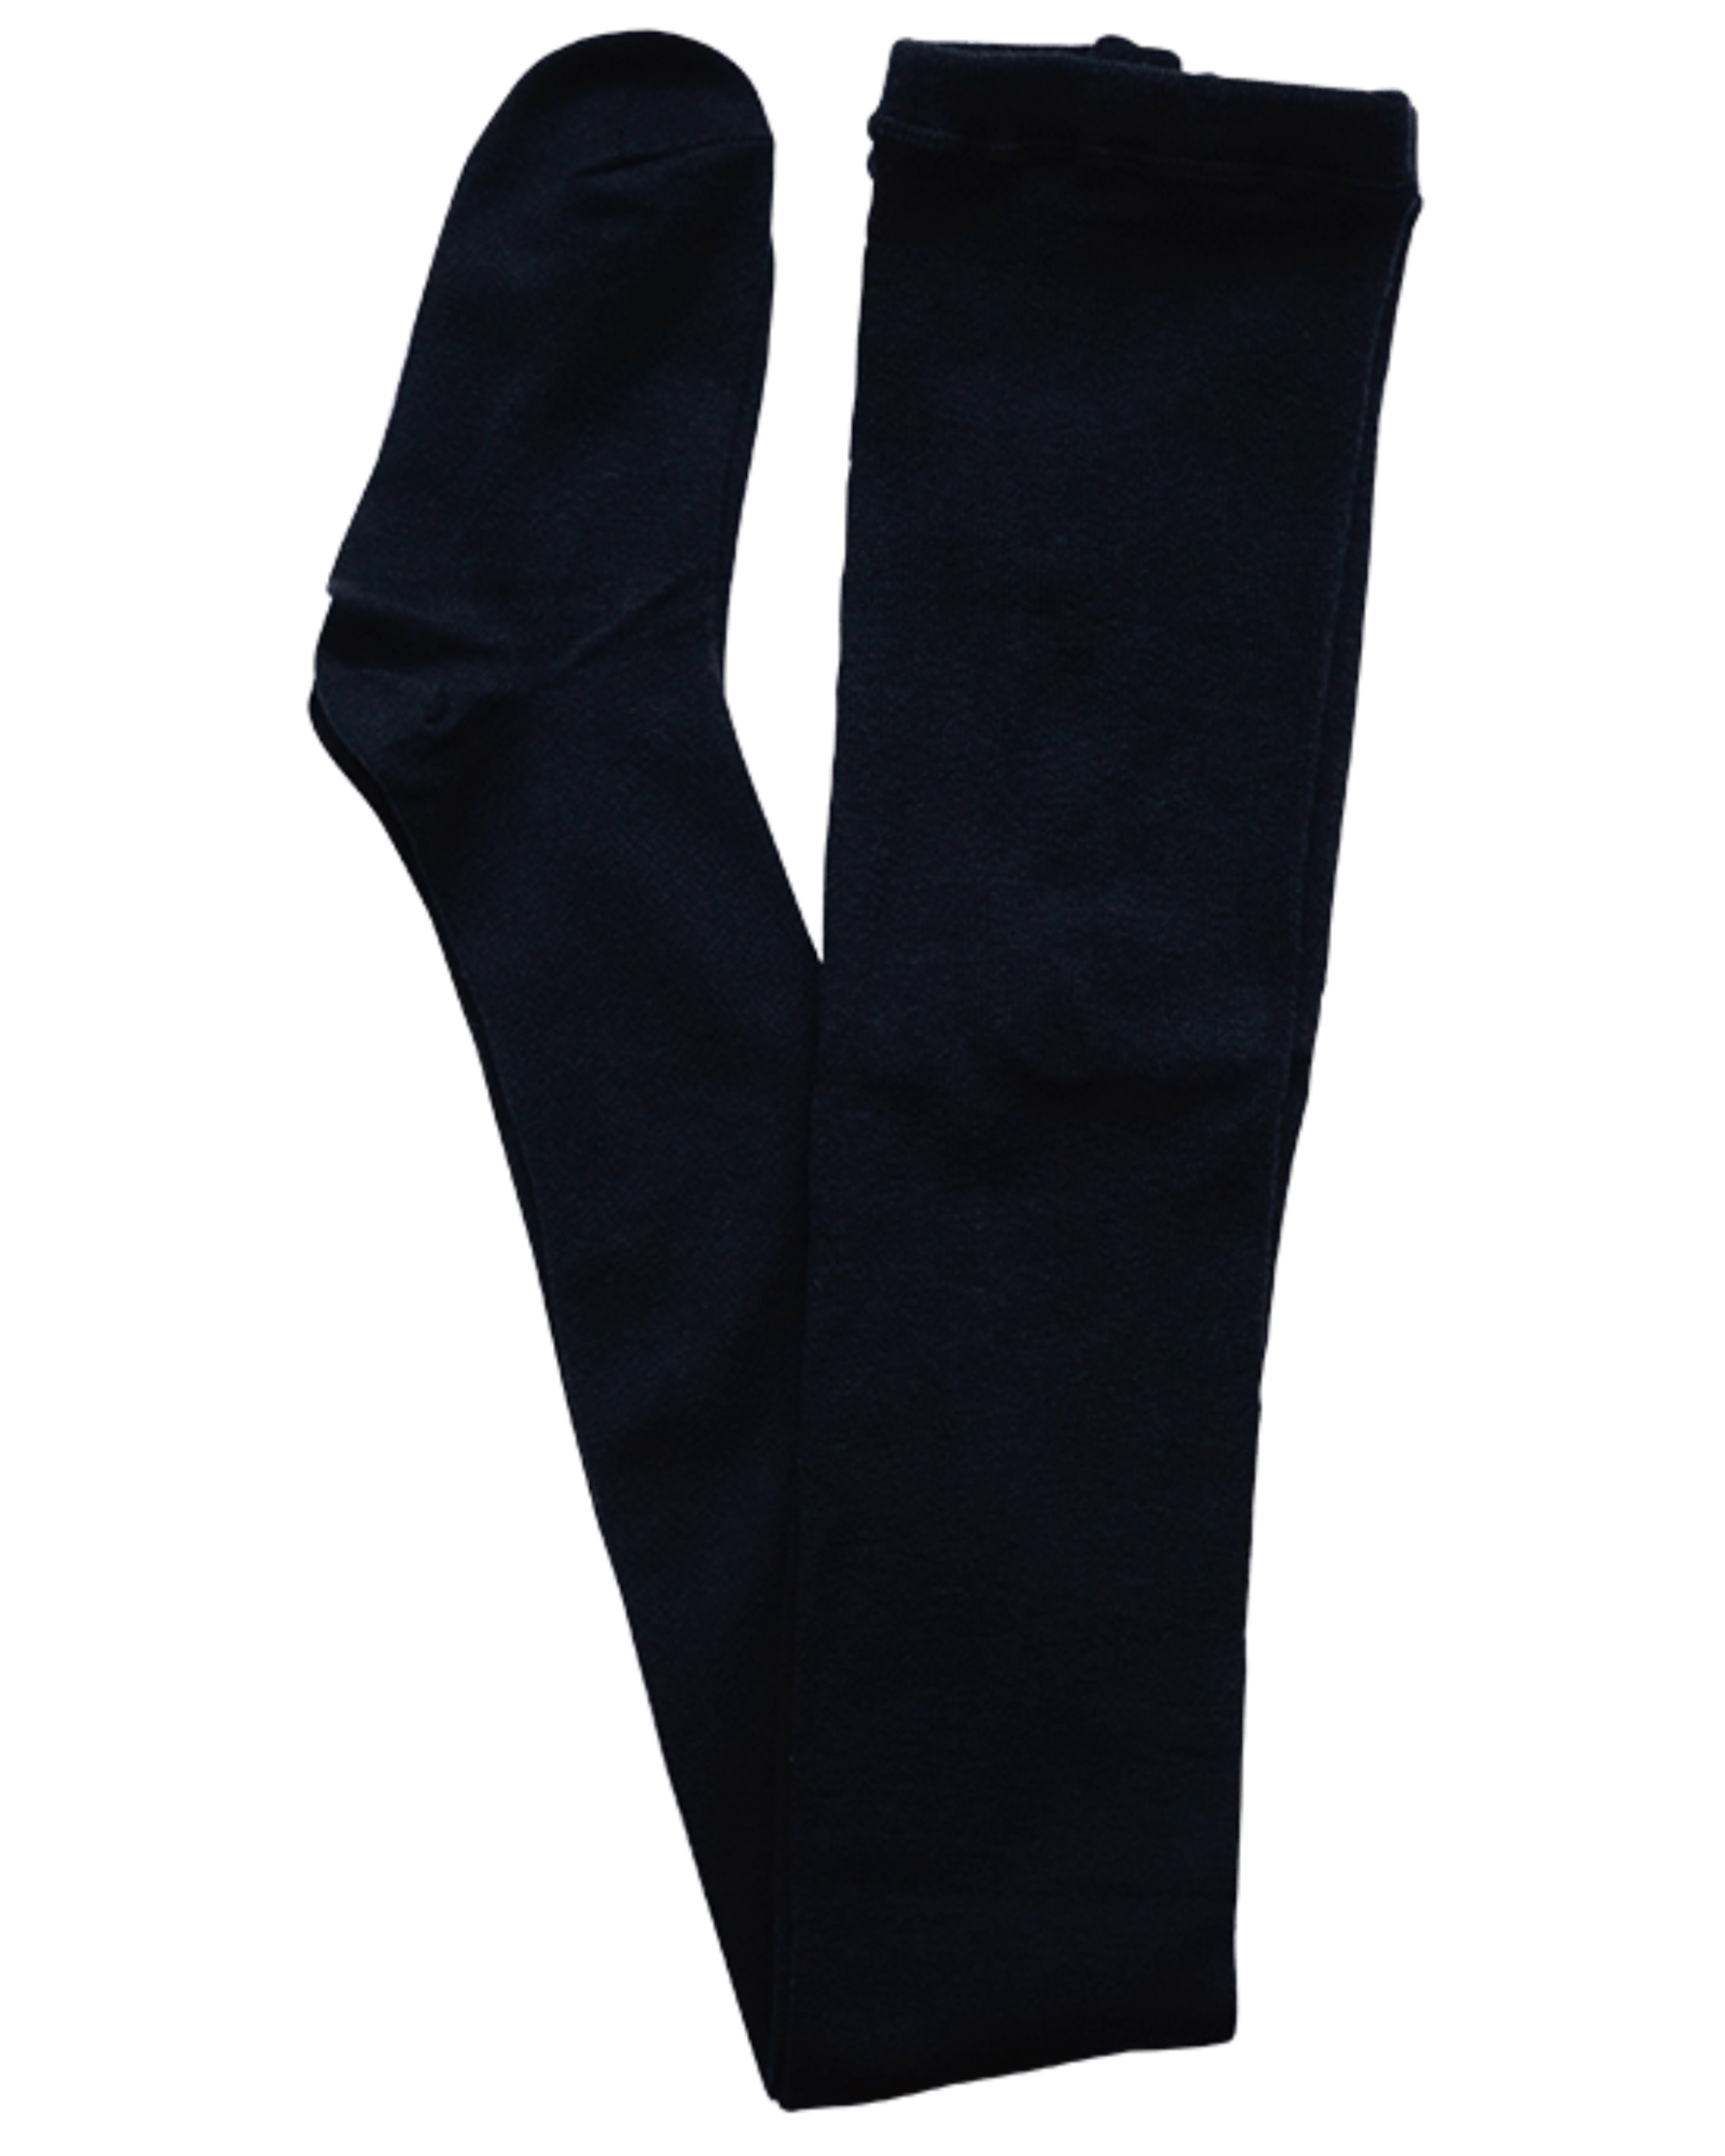 merino wool tights from japan